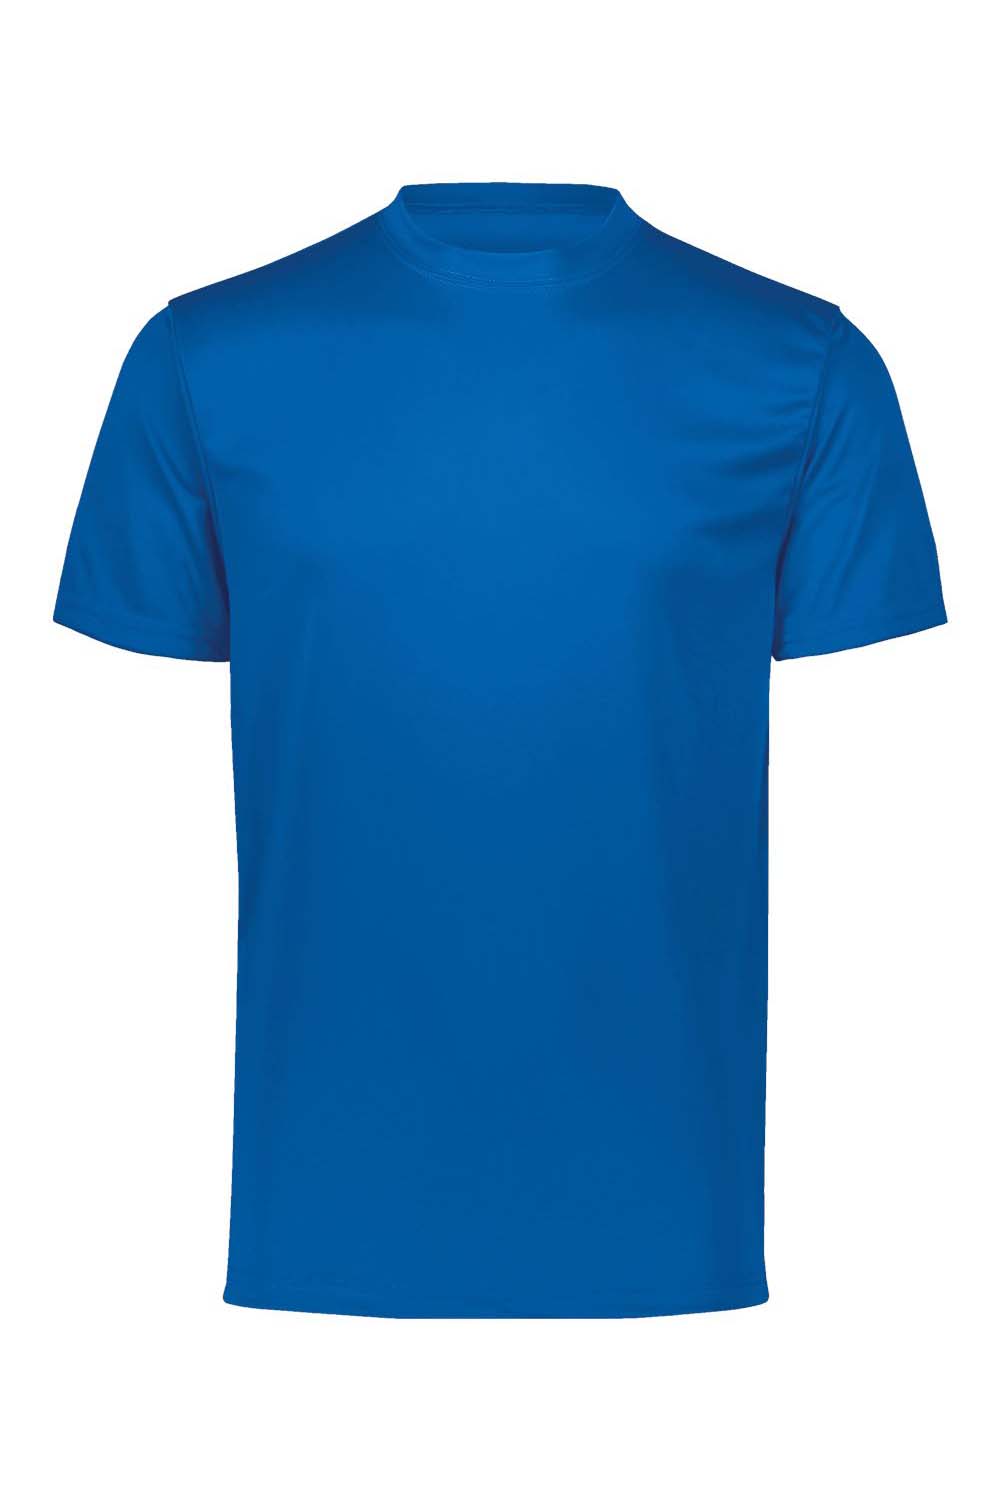 Augusta Sportswear 790 Mens Moisture Wicking Short Sleeve Crewneck T-Shirt Royal Blue Model Flat Front